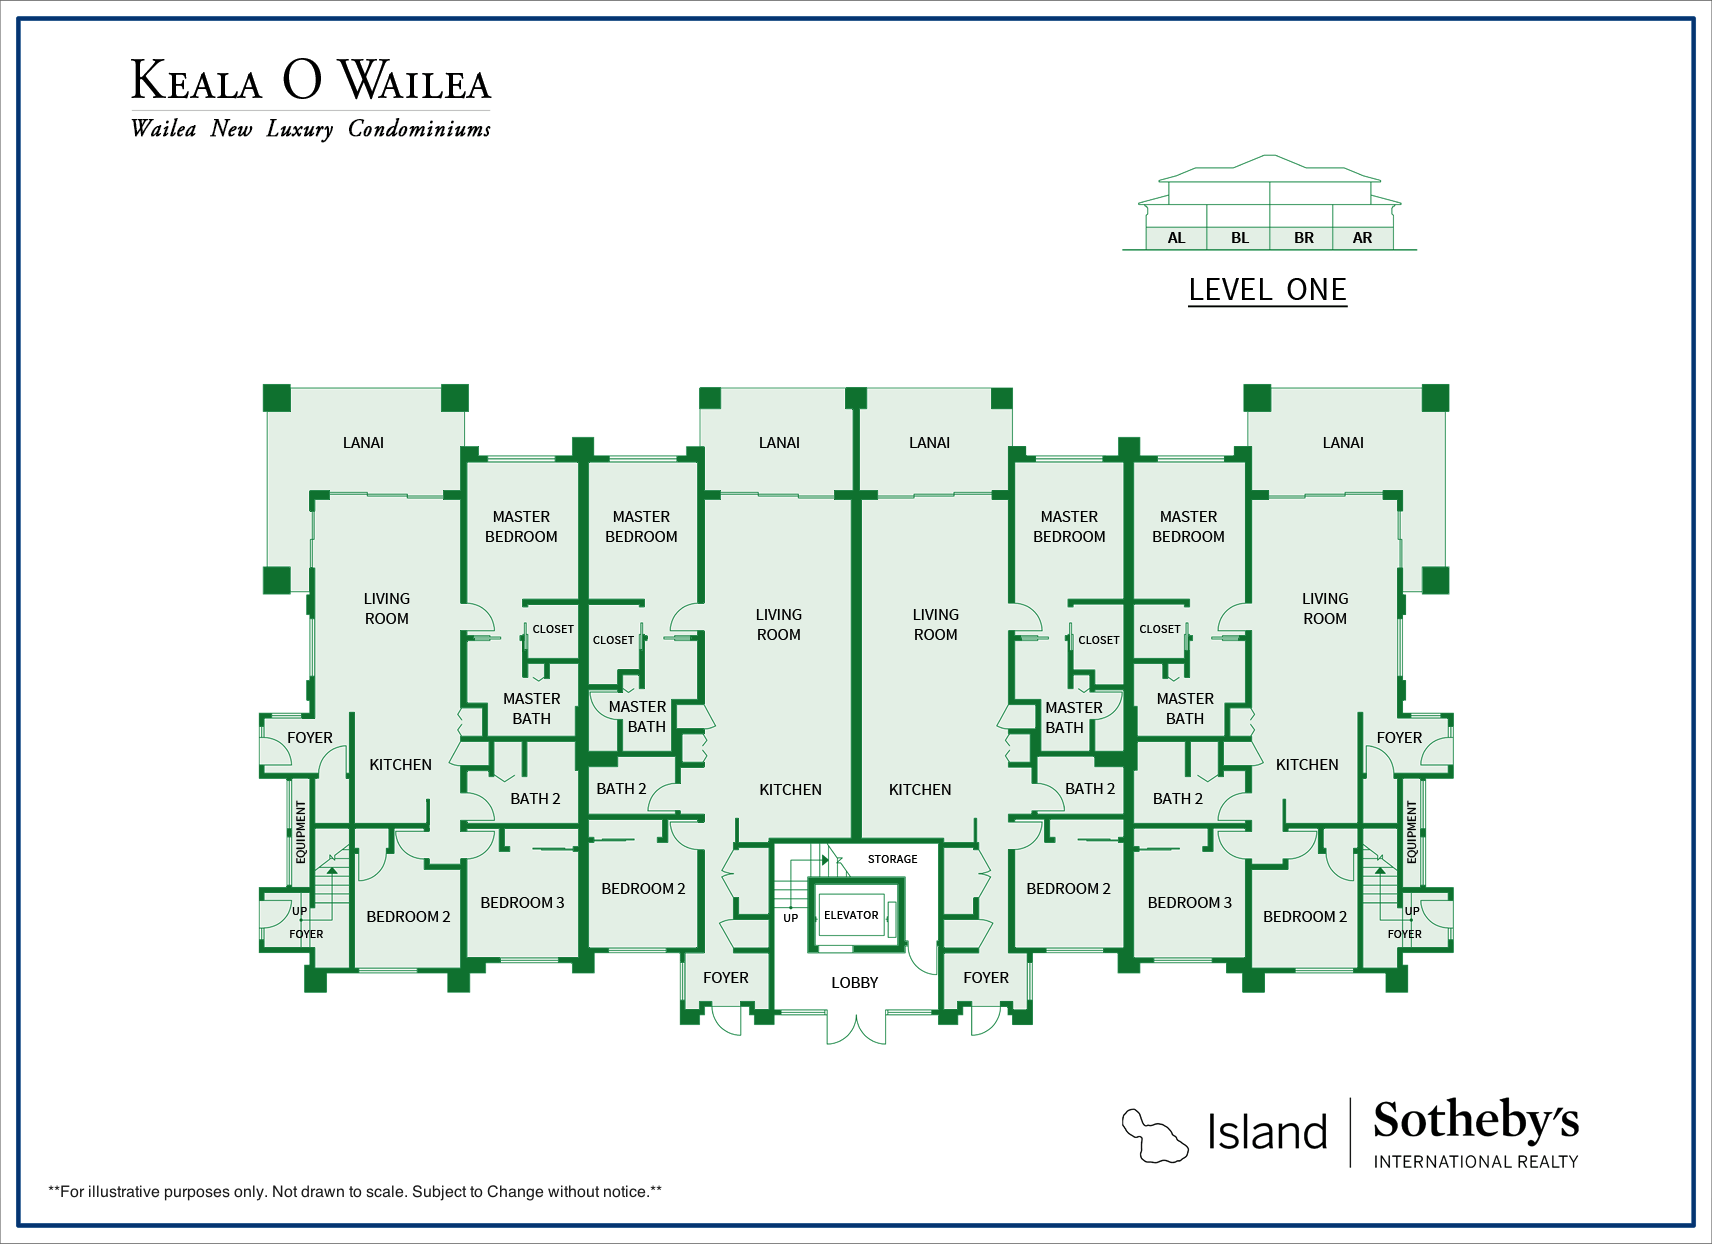 keala o wailea ground level floor plans